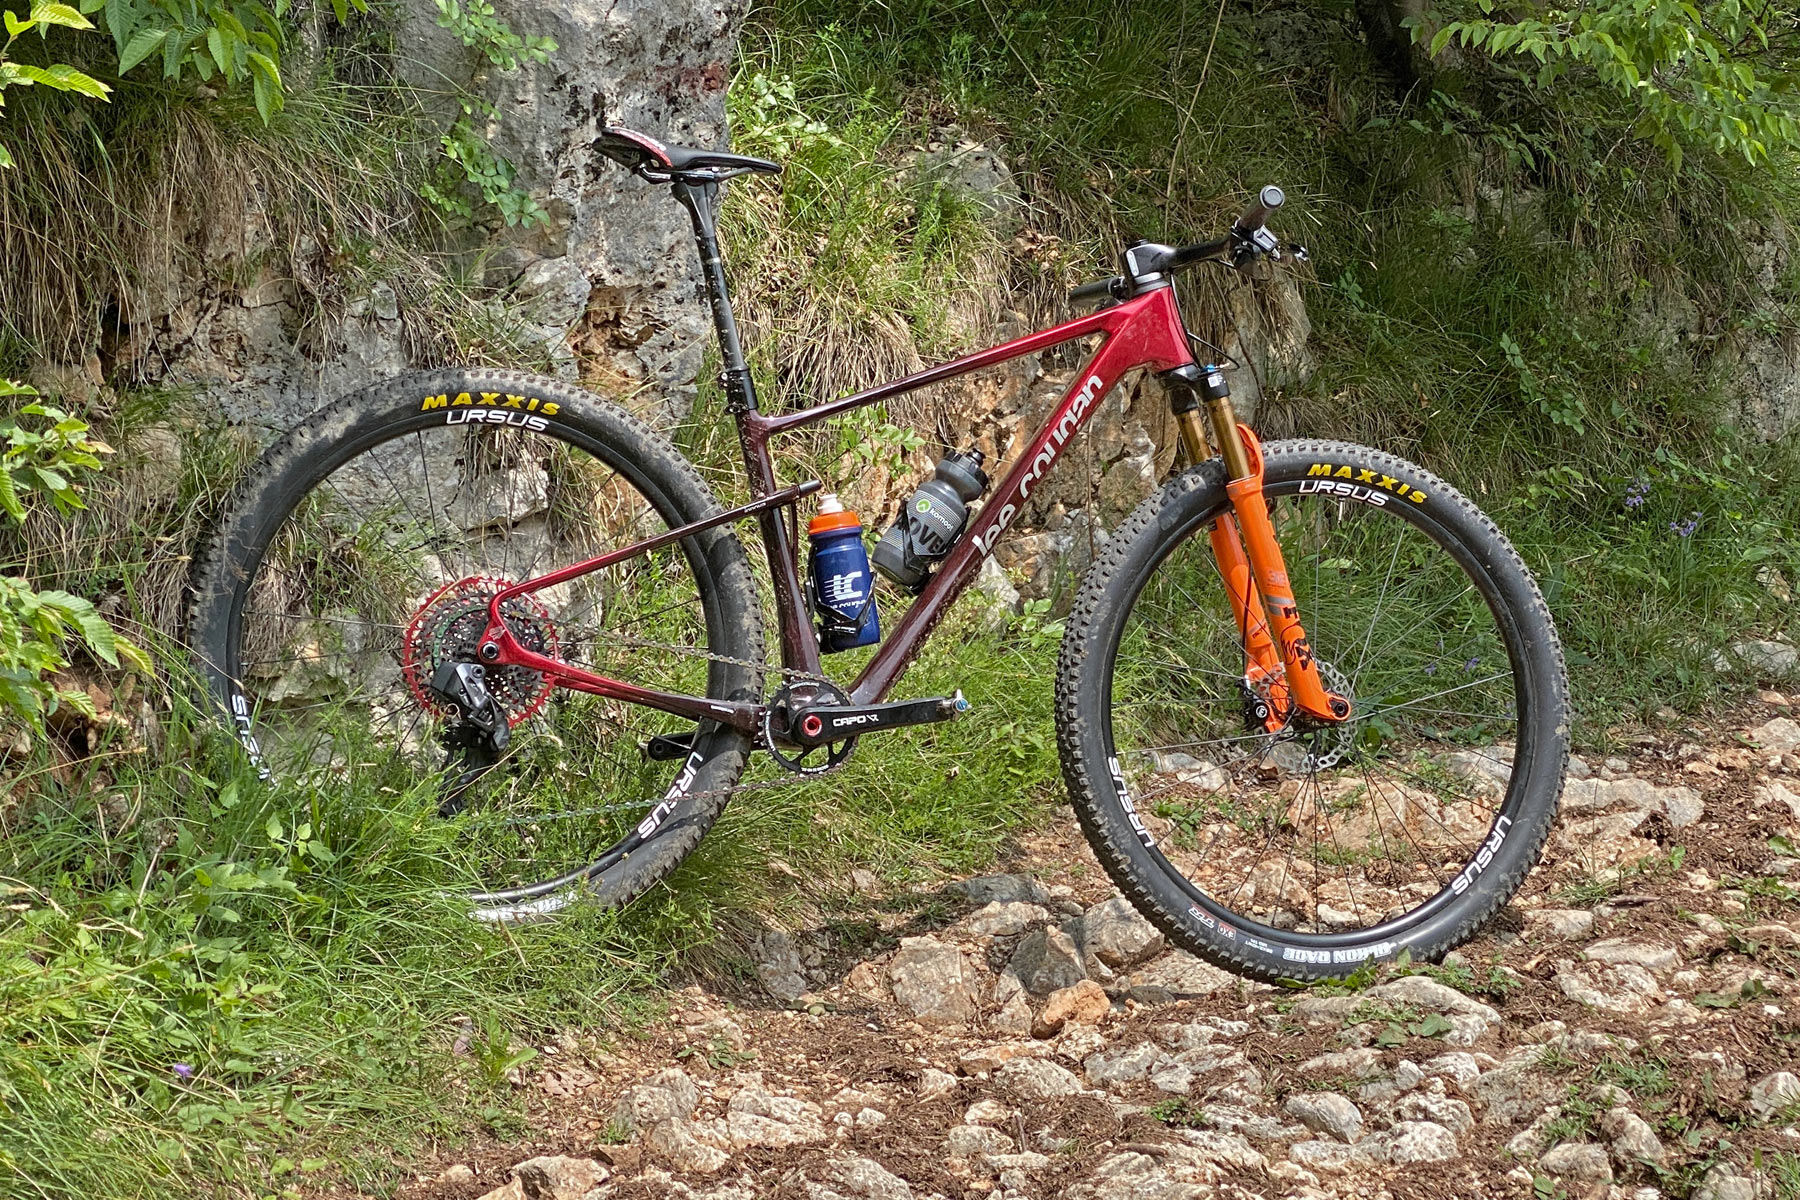 Lee Cougan Rampage Innova 30mm carbon XC MTB mountain bike softail, complete